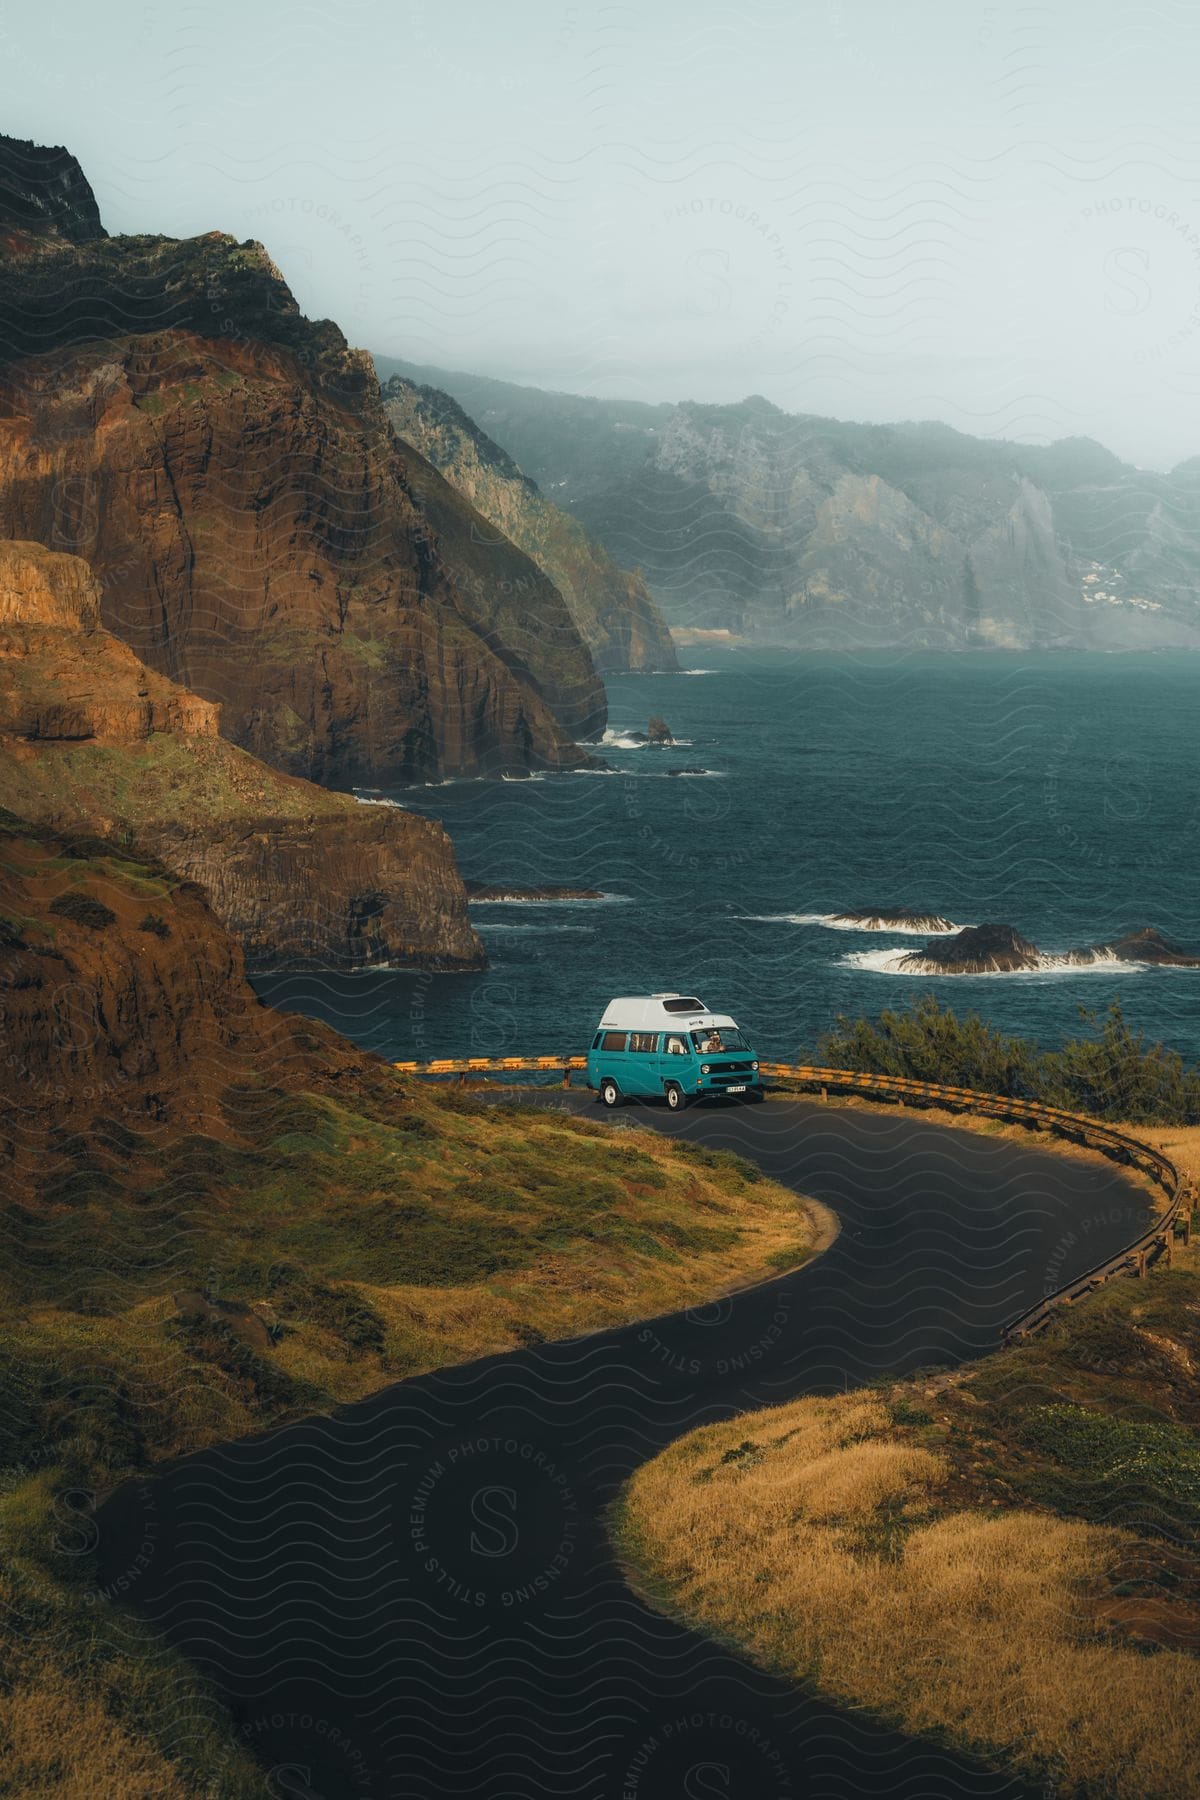 Van drives along coastal highway winding between mountain cliff and the ocean.